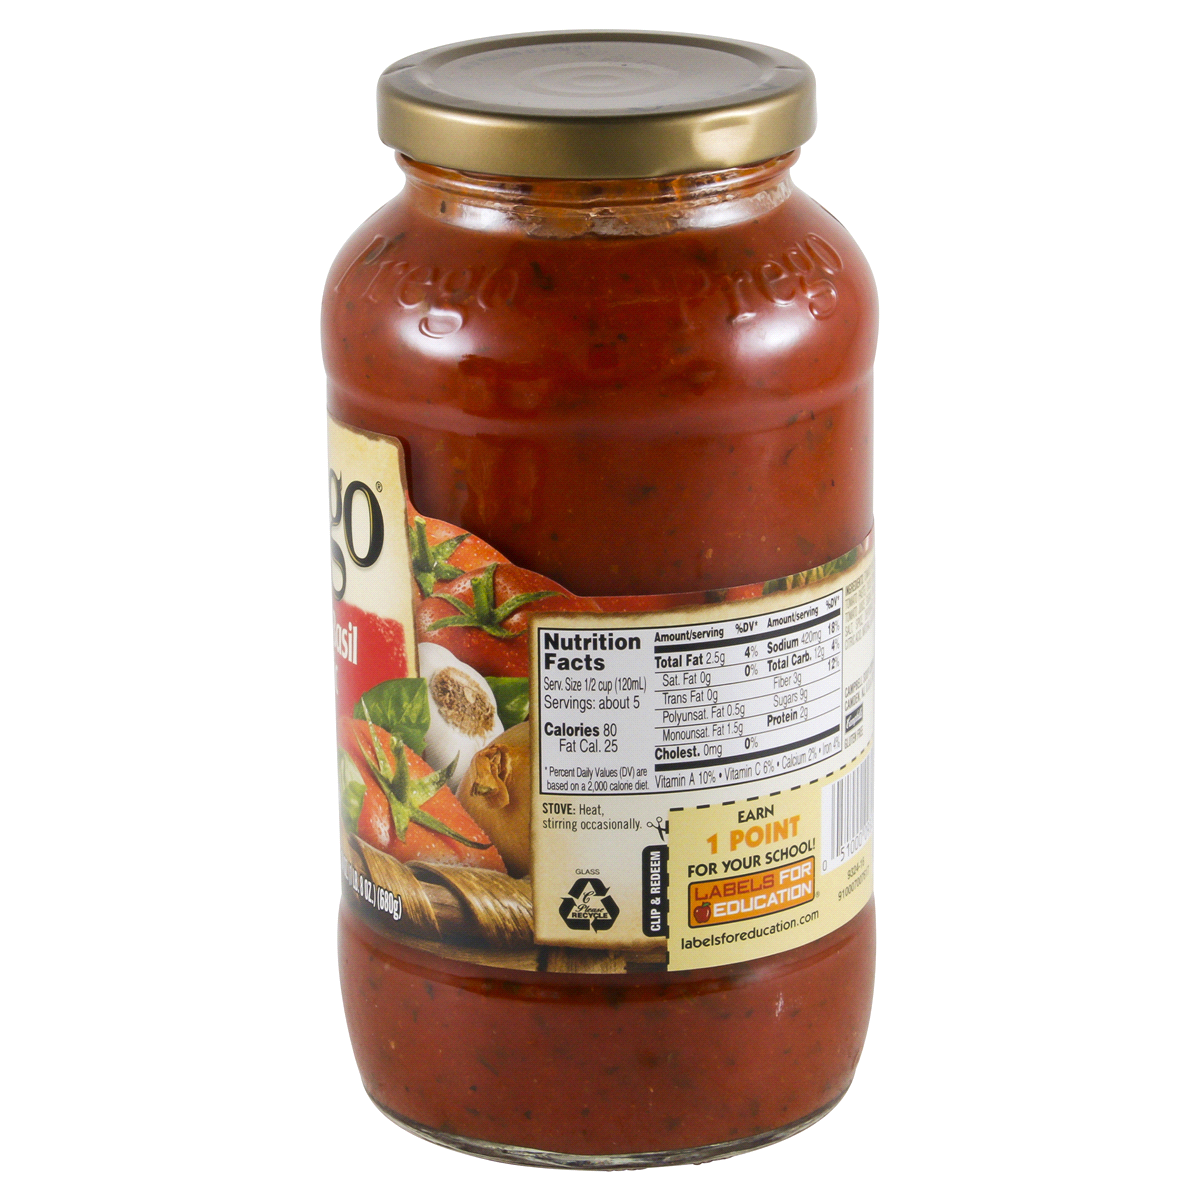 Prego Pasta Sauce Traditional Italian Tomato Sauce 24oz : Target